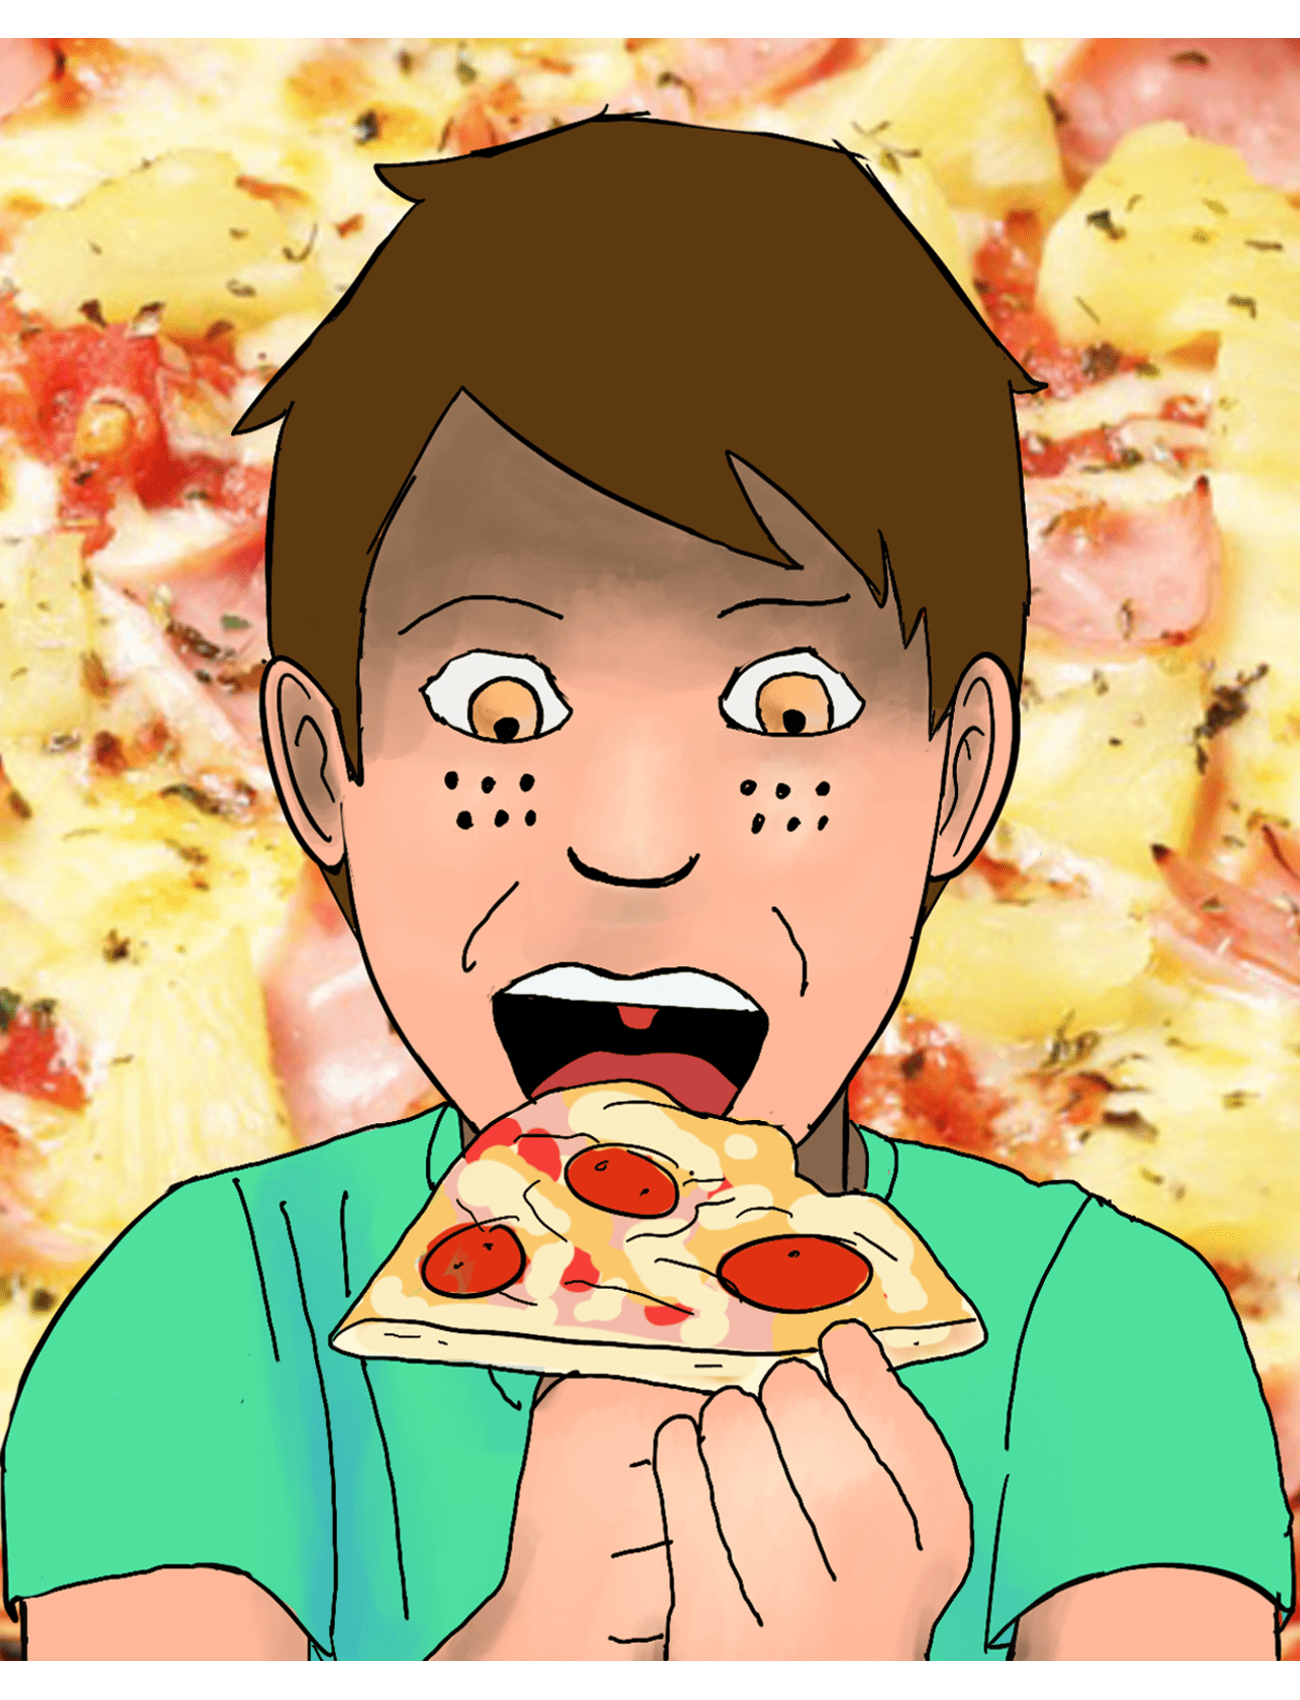 I love pizzas.